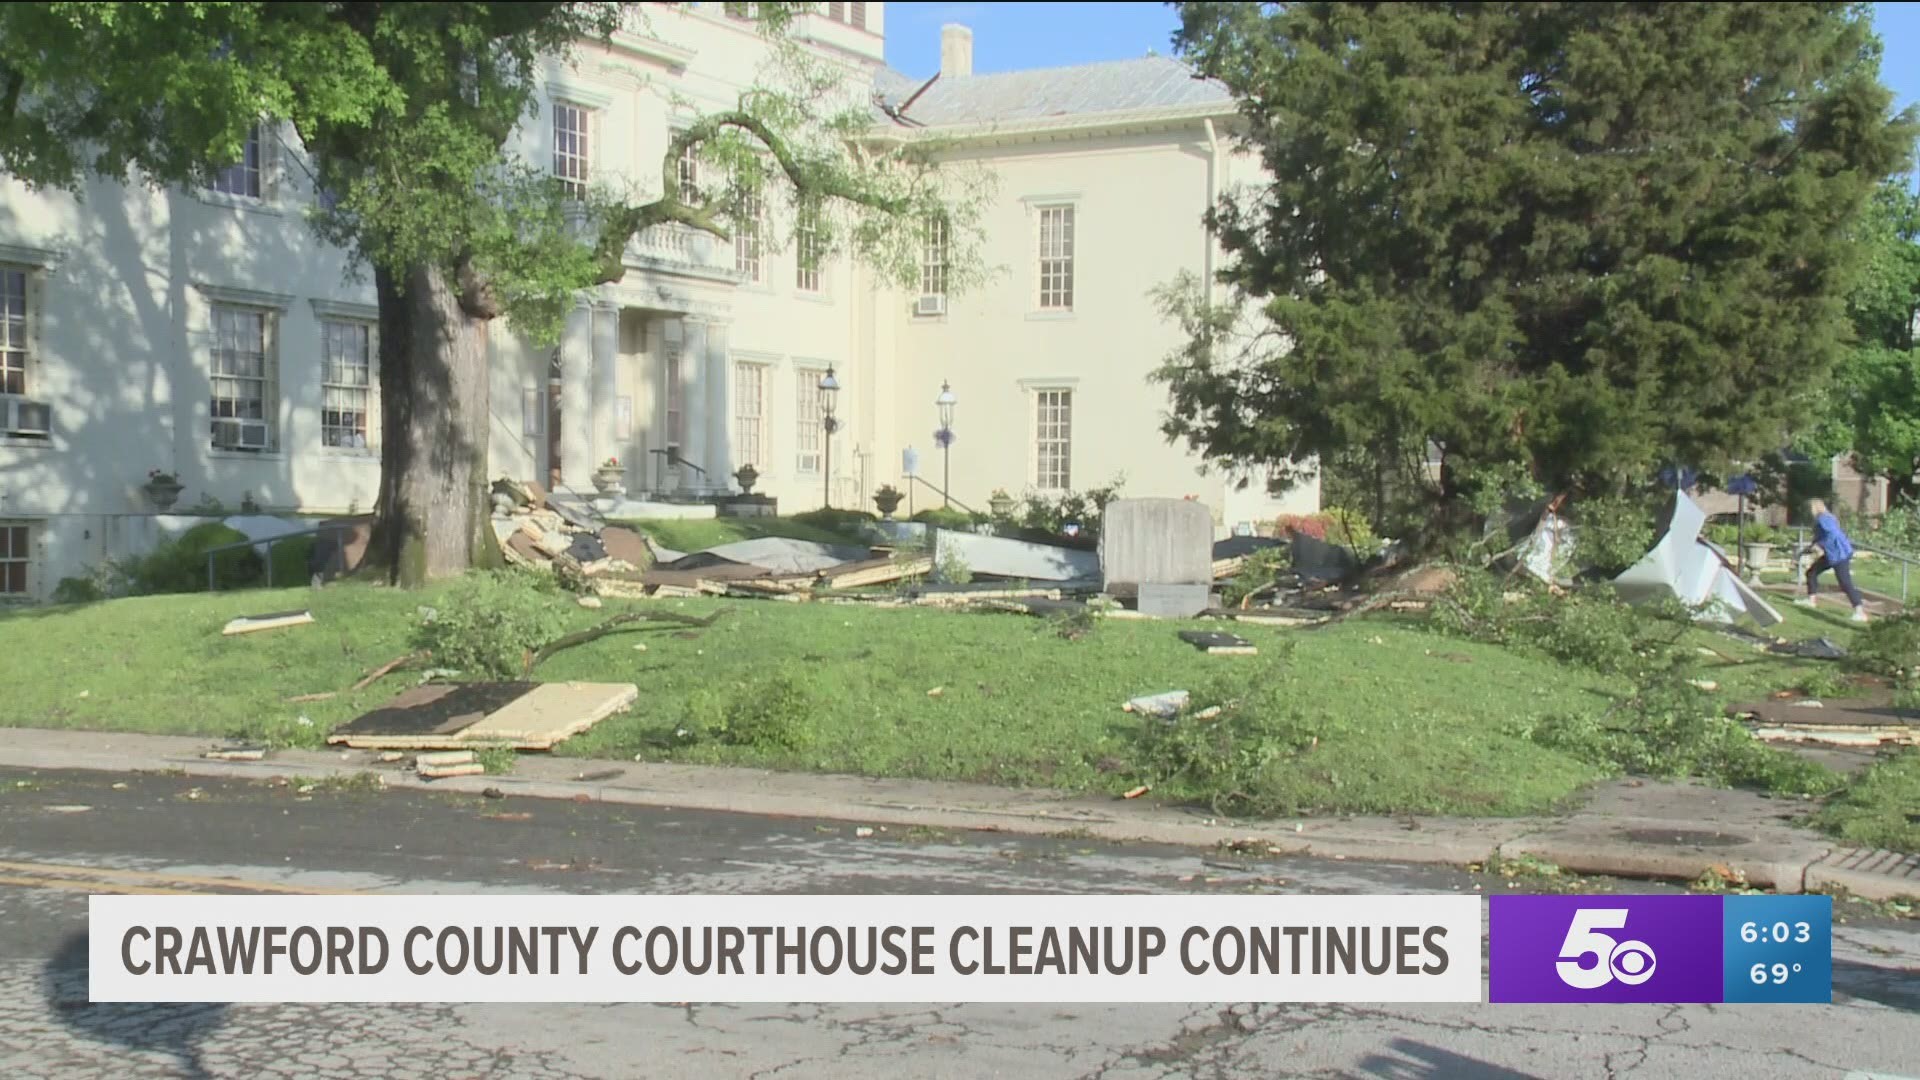 Sen. John Boozman visited the courthouse Friday to survey the damage.